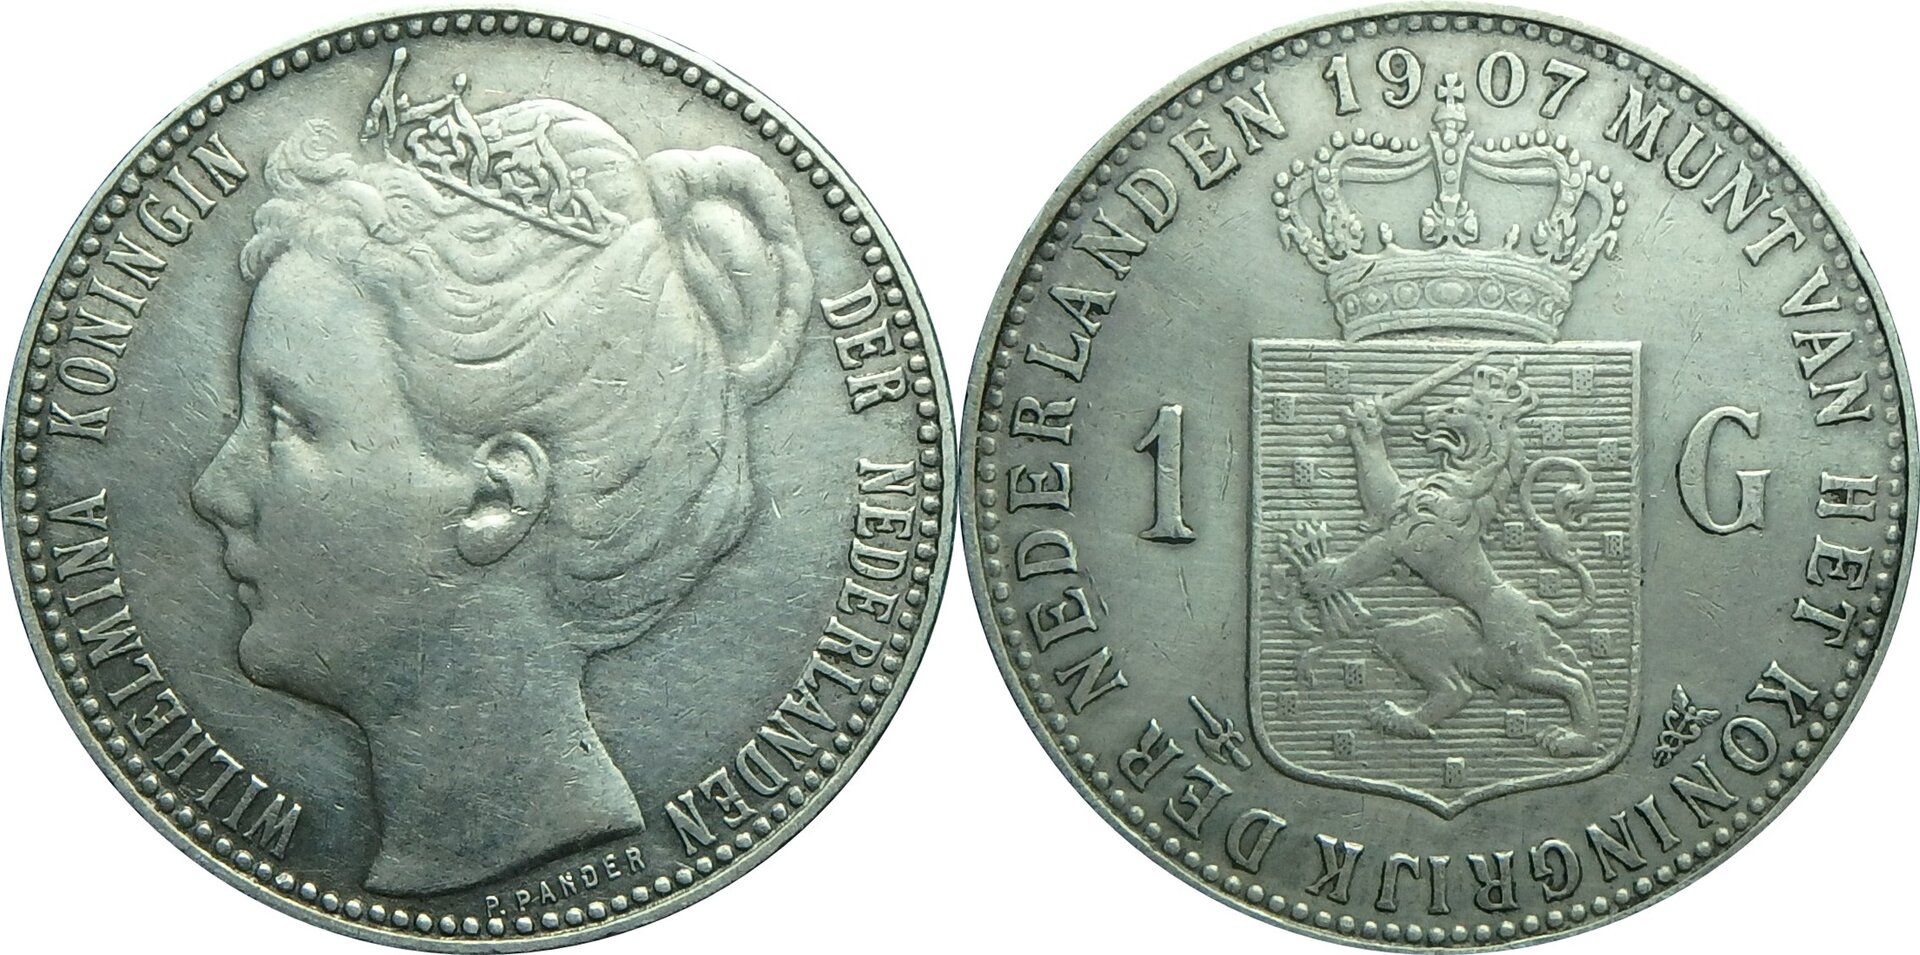 1907 NL 1 g.jpg